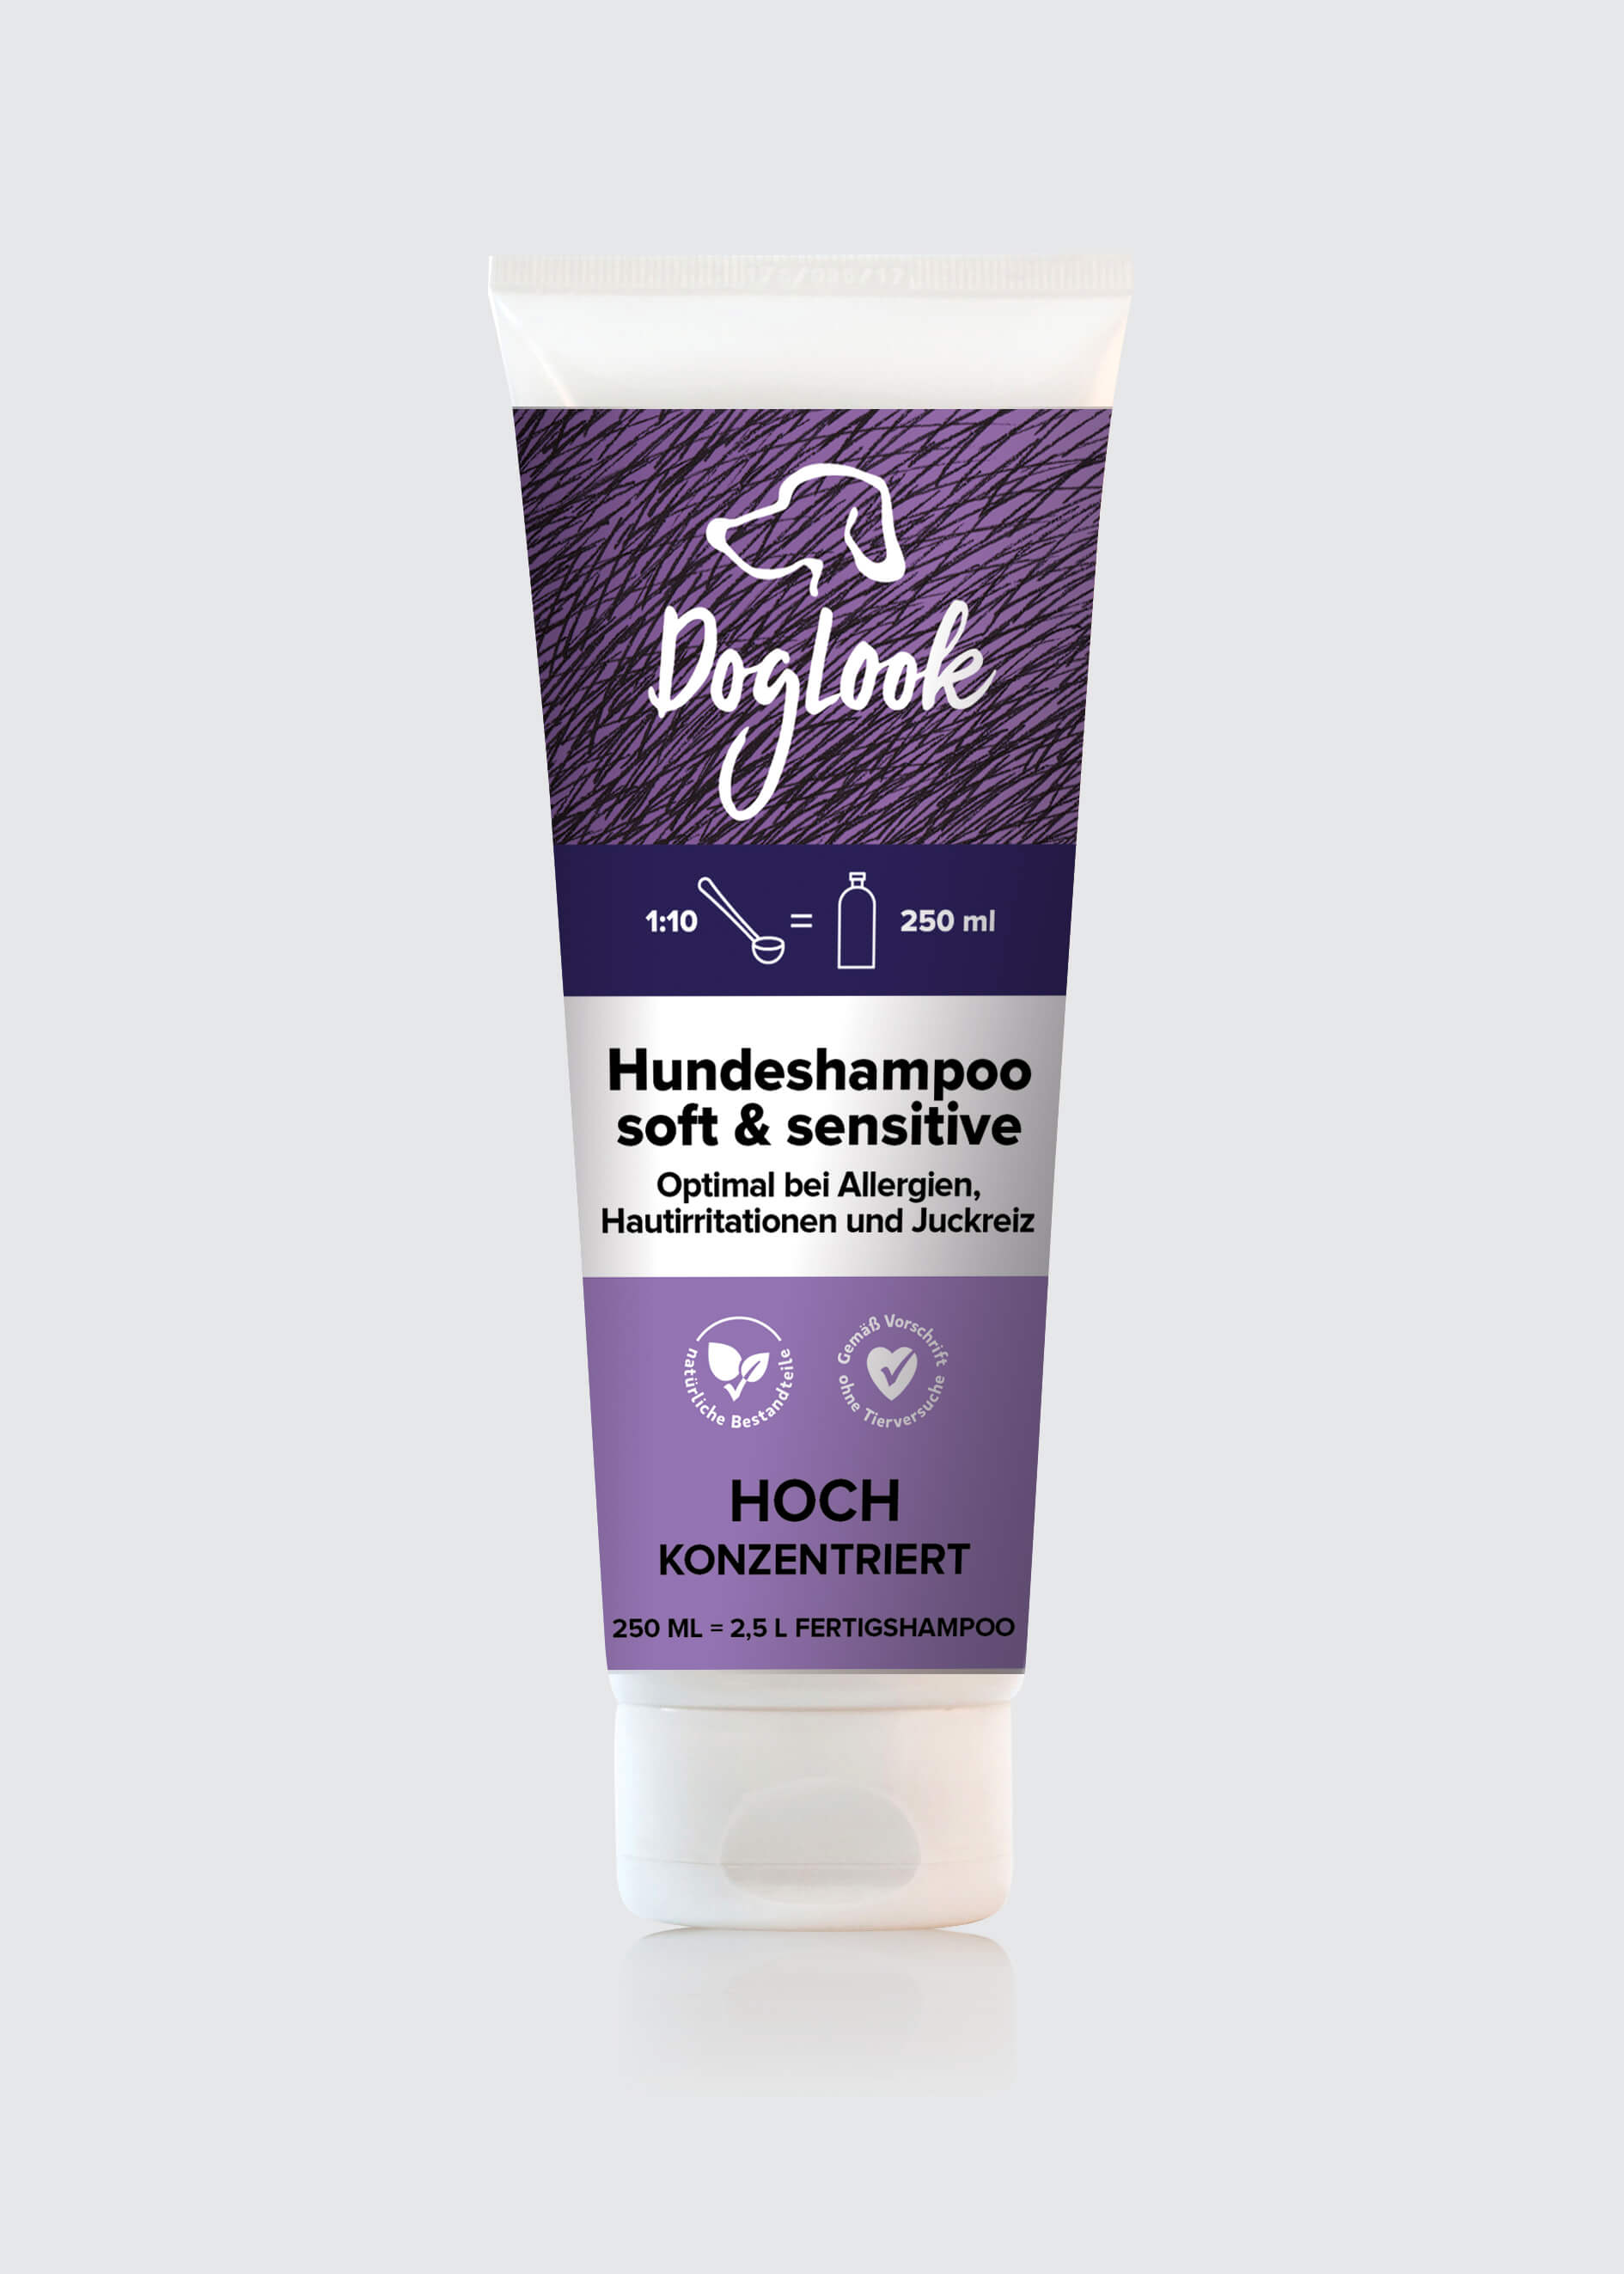 DOGLOOK Soft & Sensitive Hundeshampoo